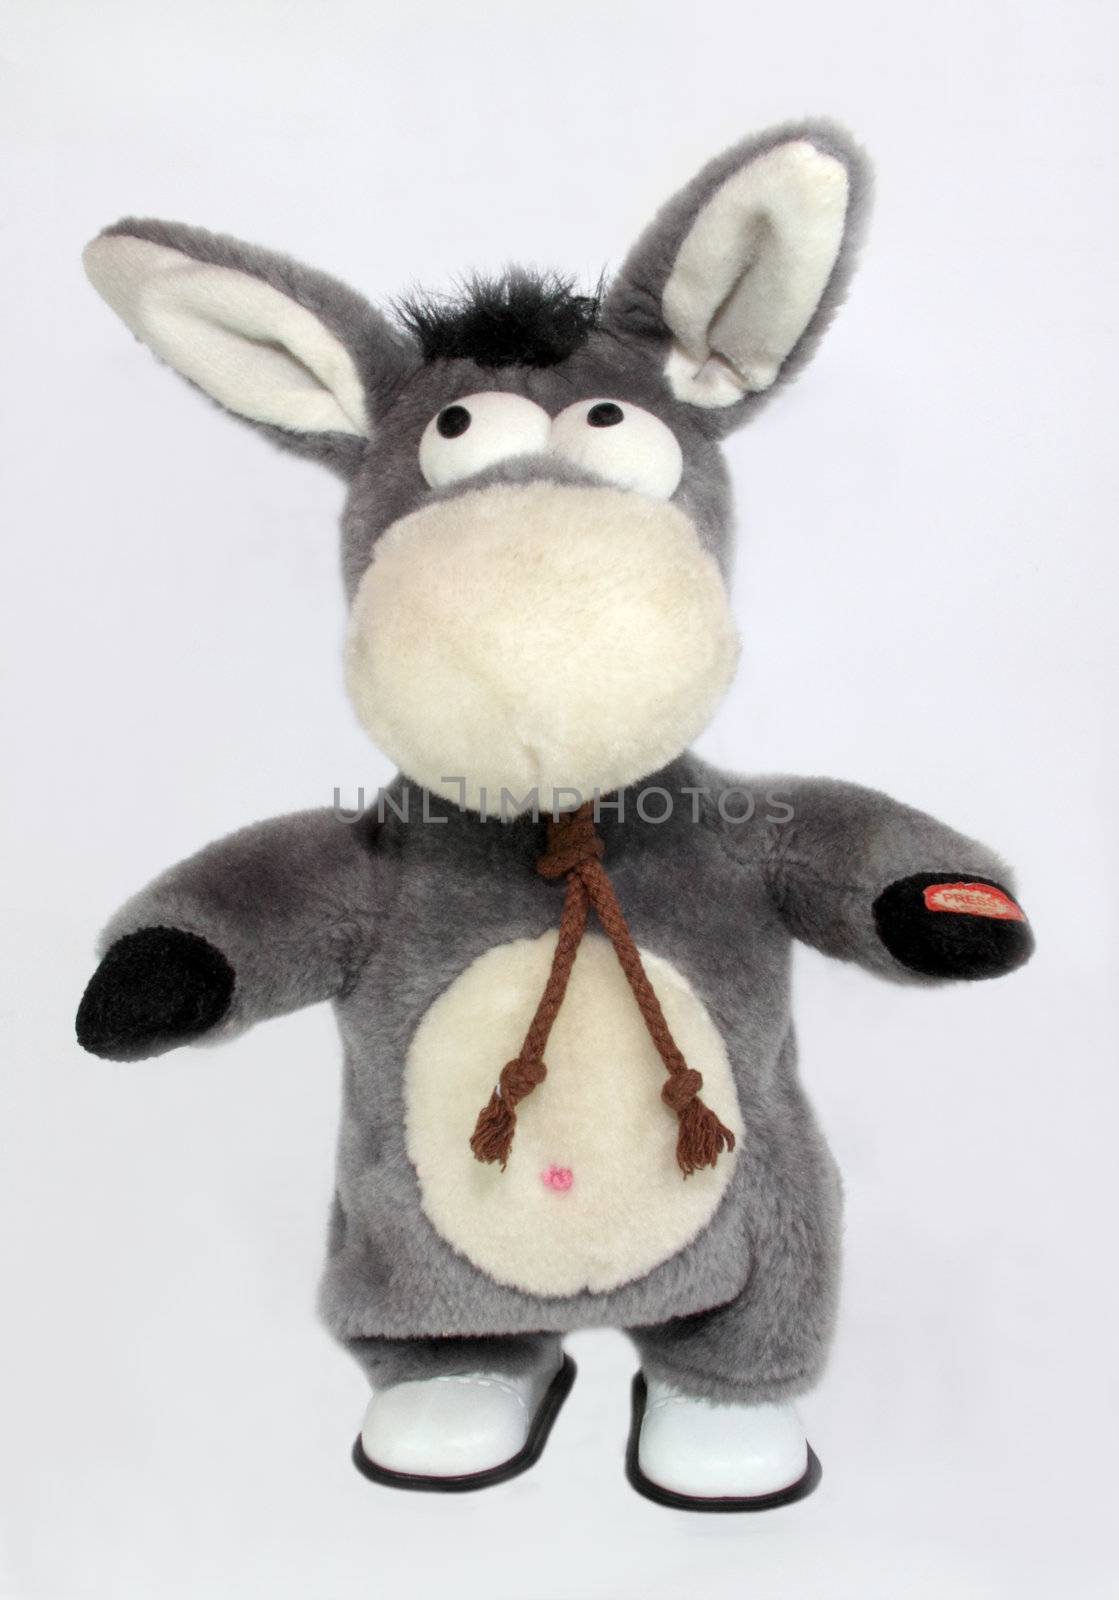 Toy burro by vladnad